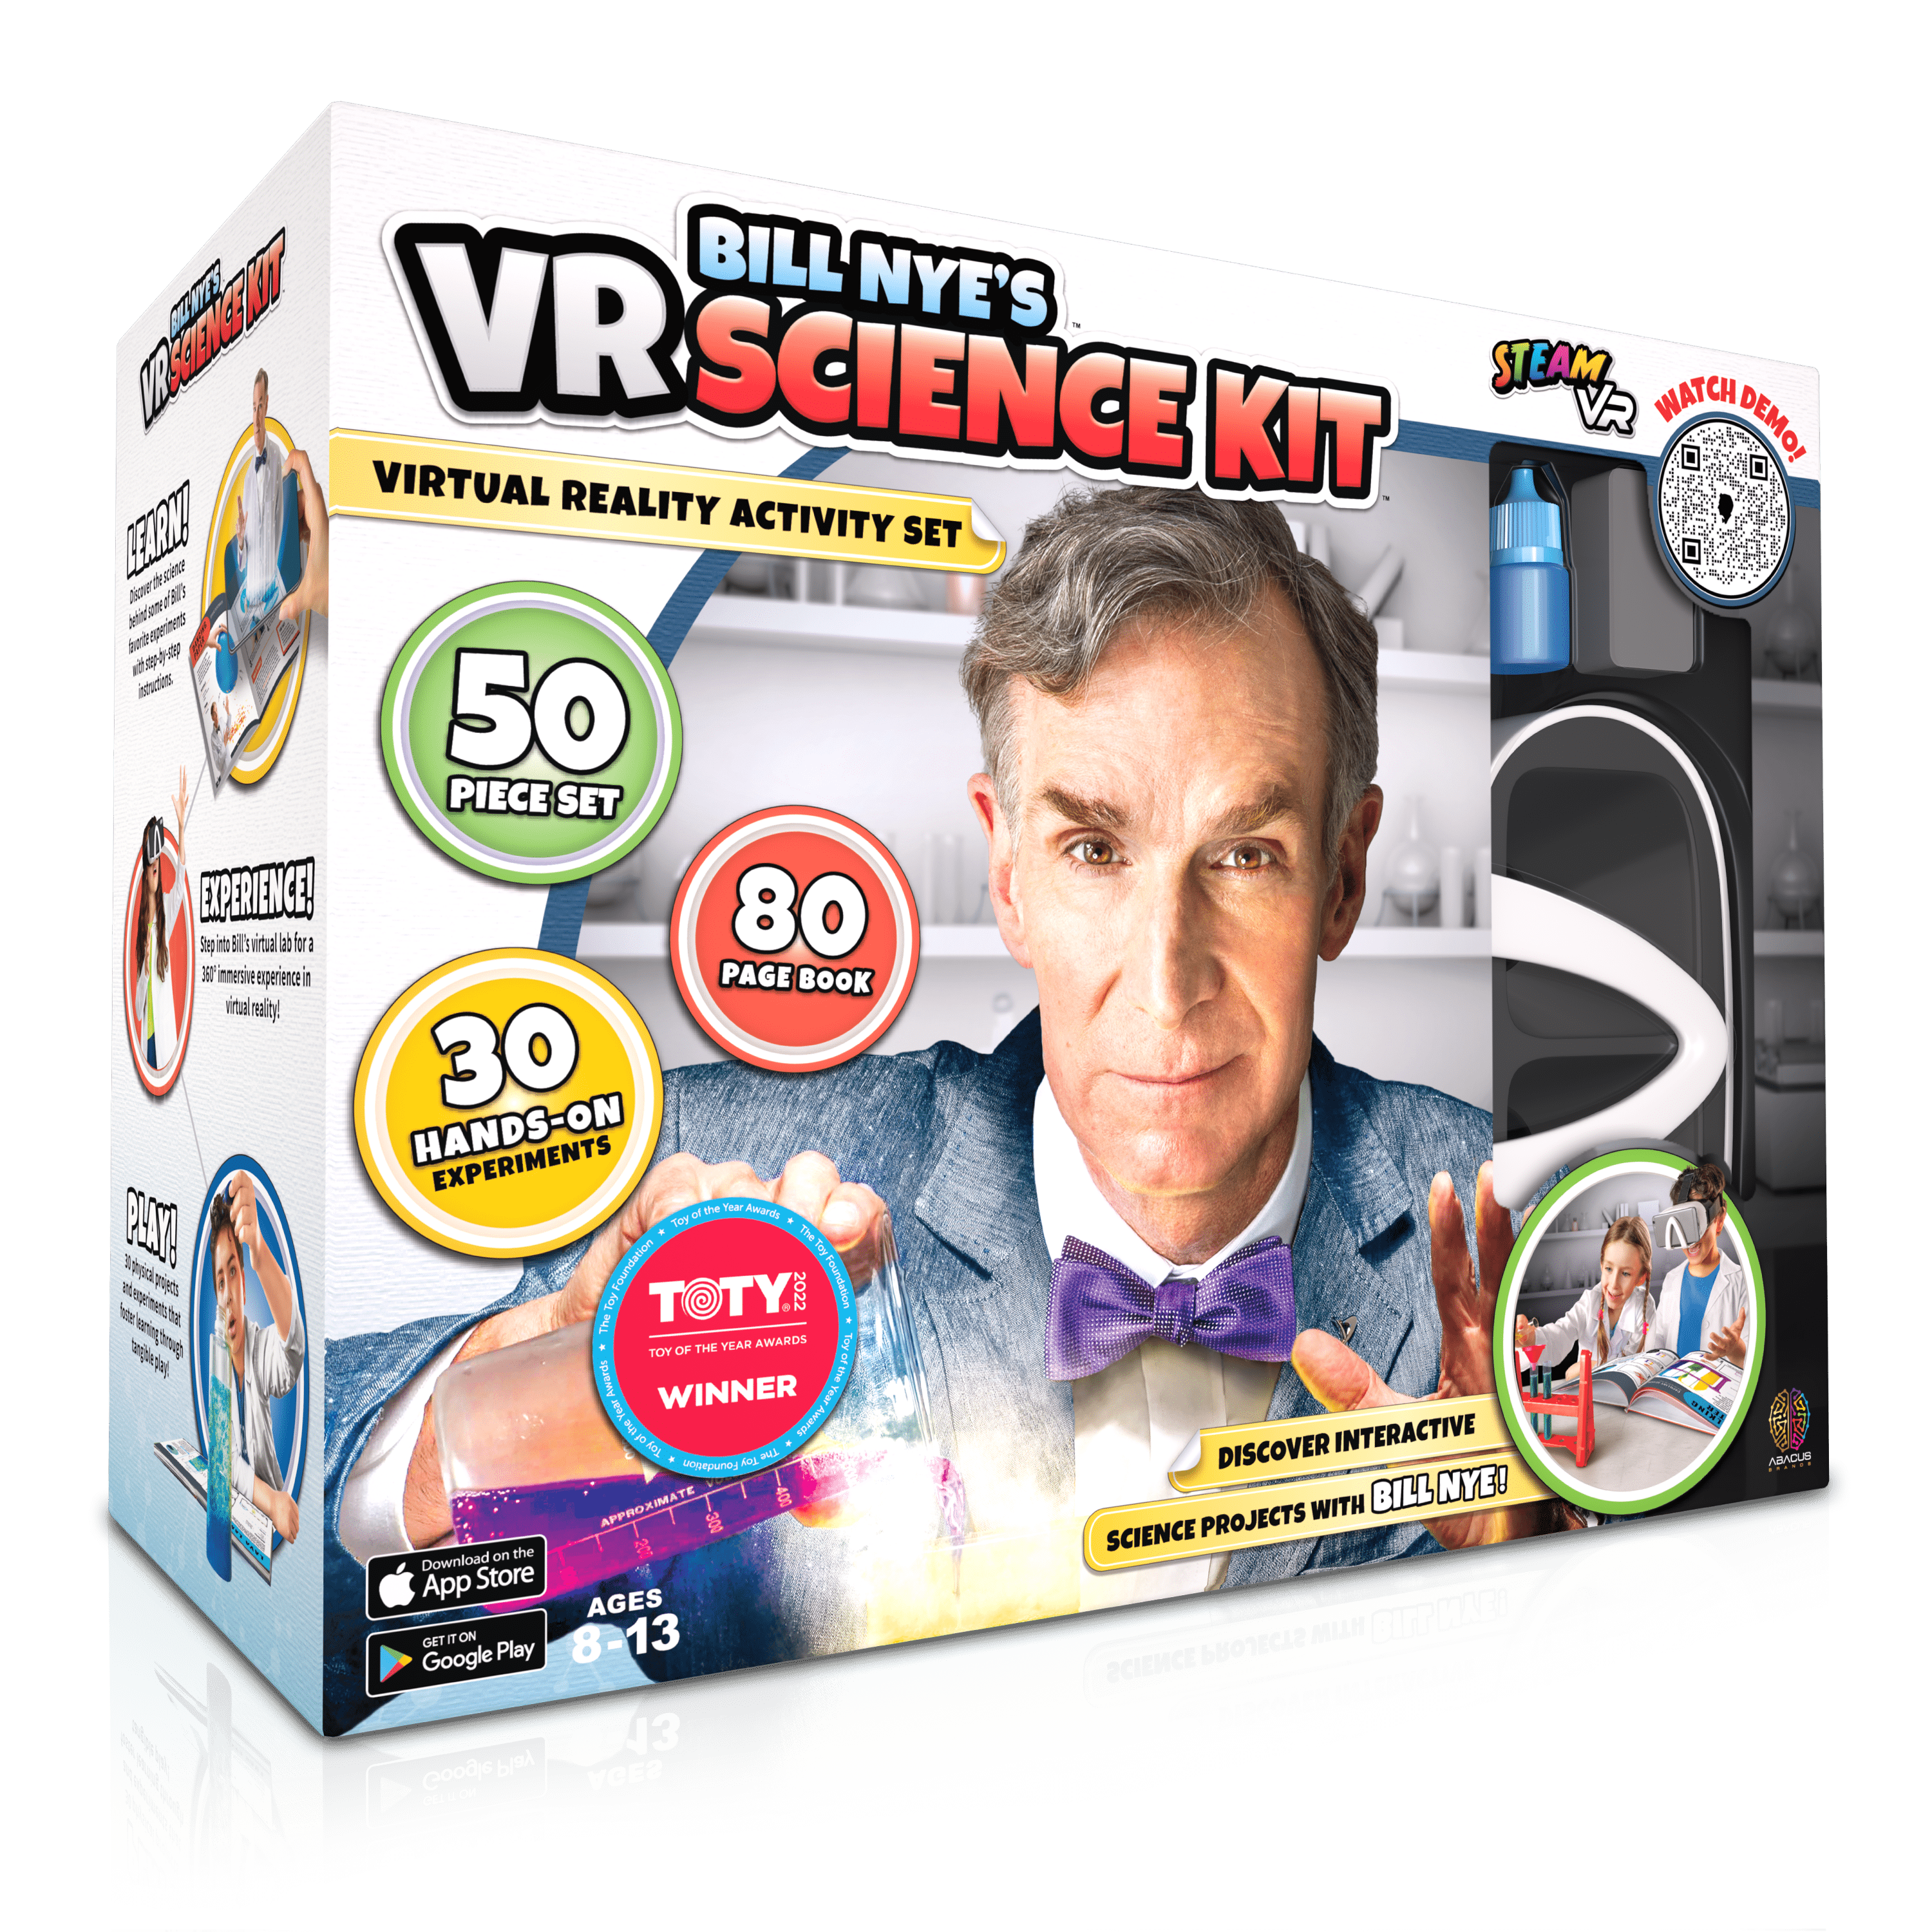 Bill Nye's VR Science Kit  Virtual Reality Science Kit For Kids - STEM  Educational Toy